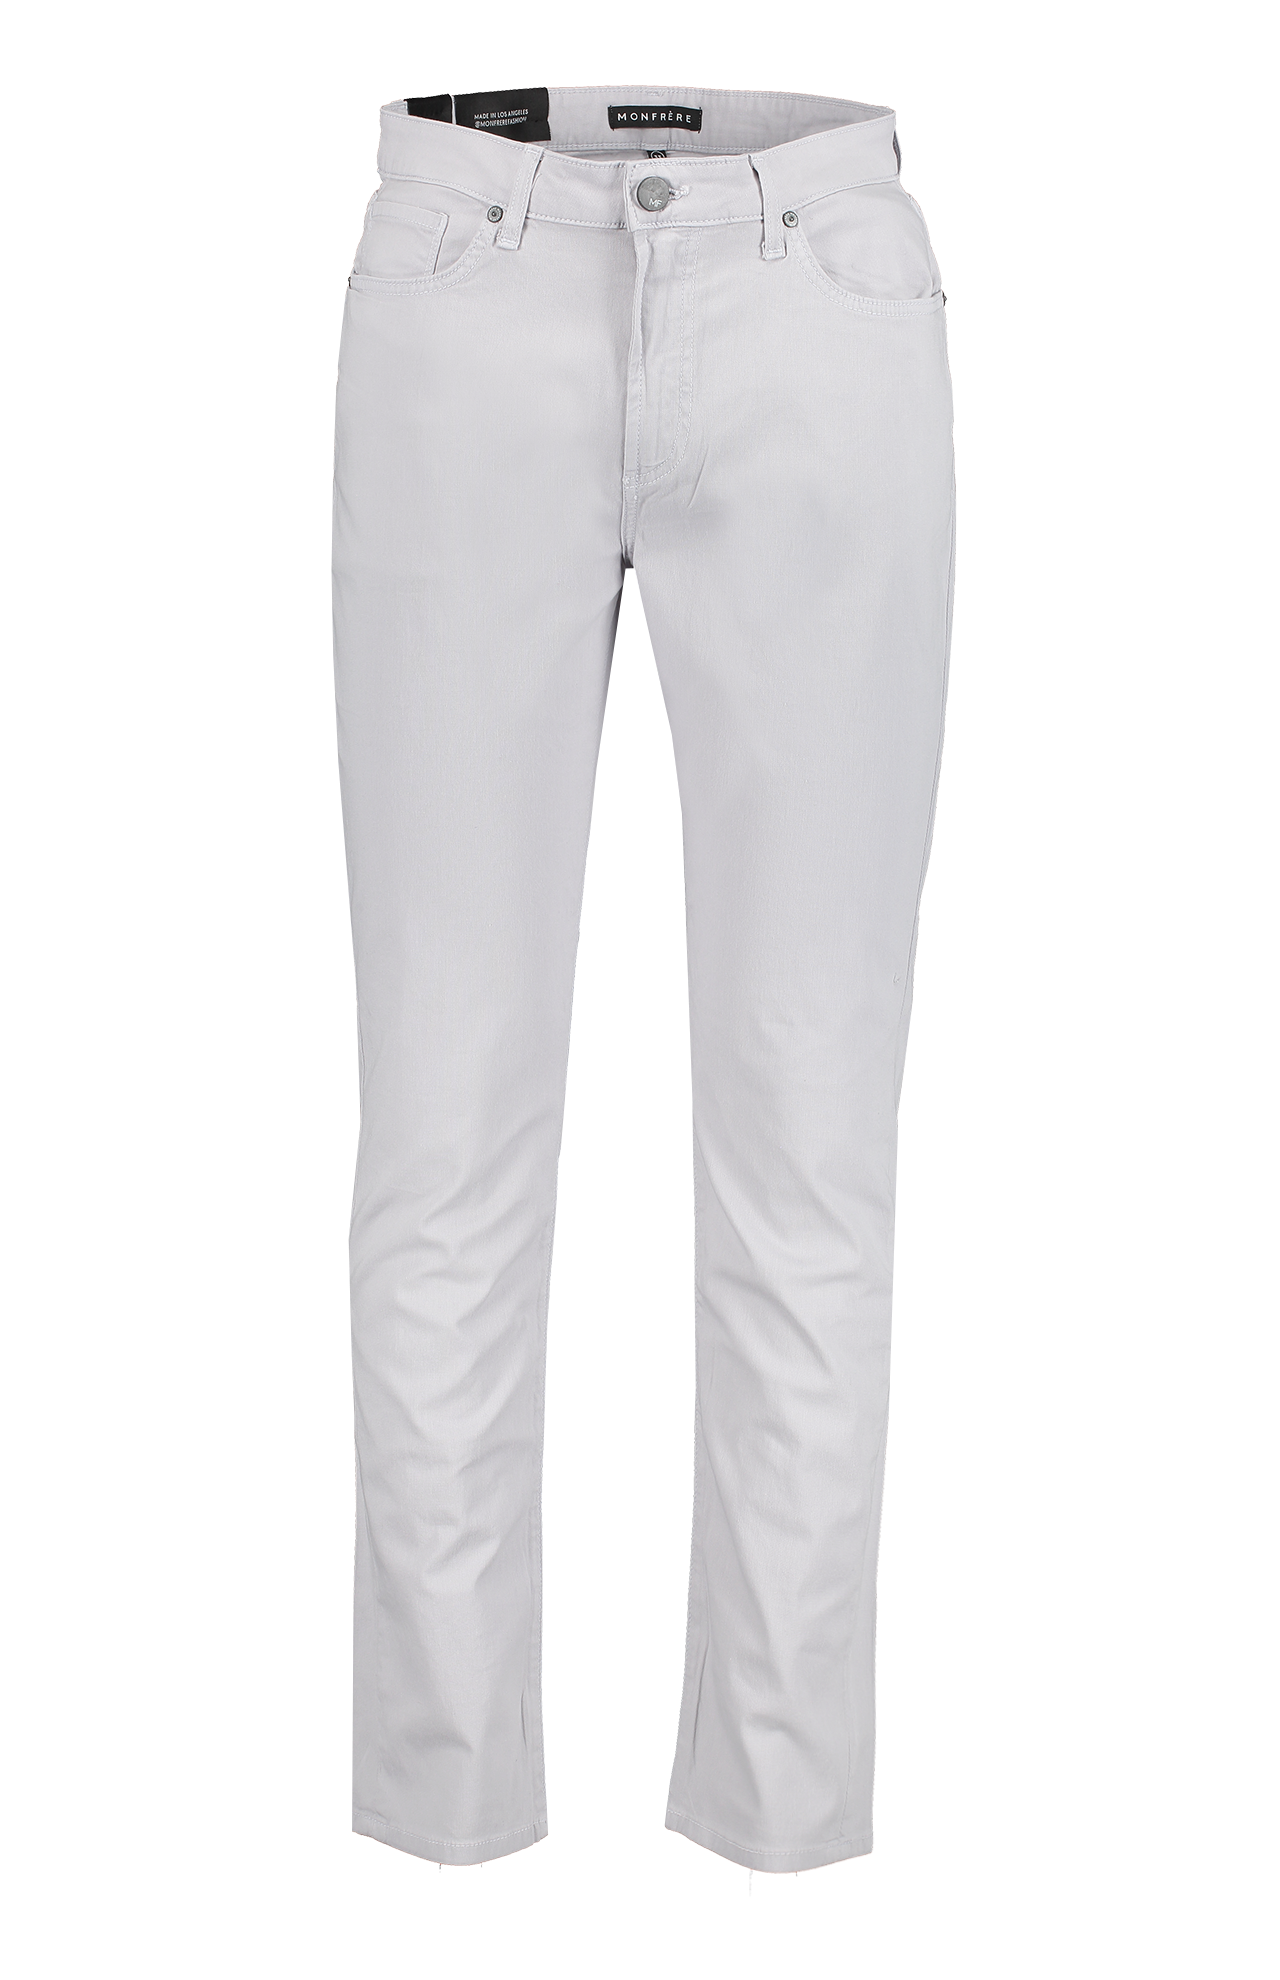 Brando Slim Fit Jeans (6843989622899)